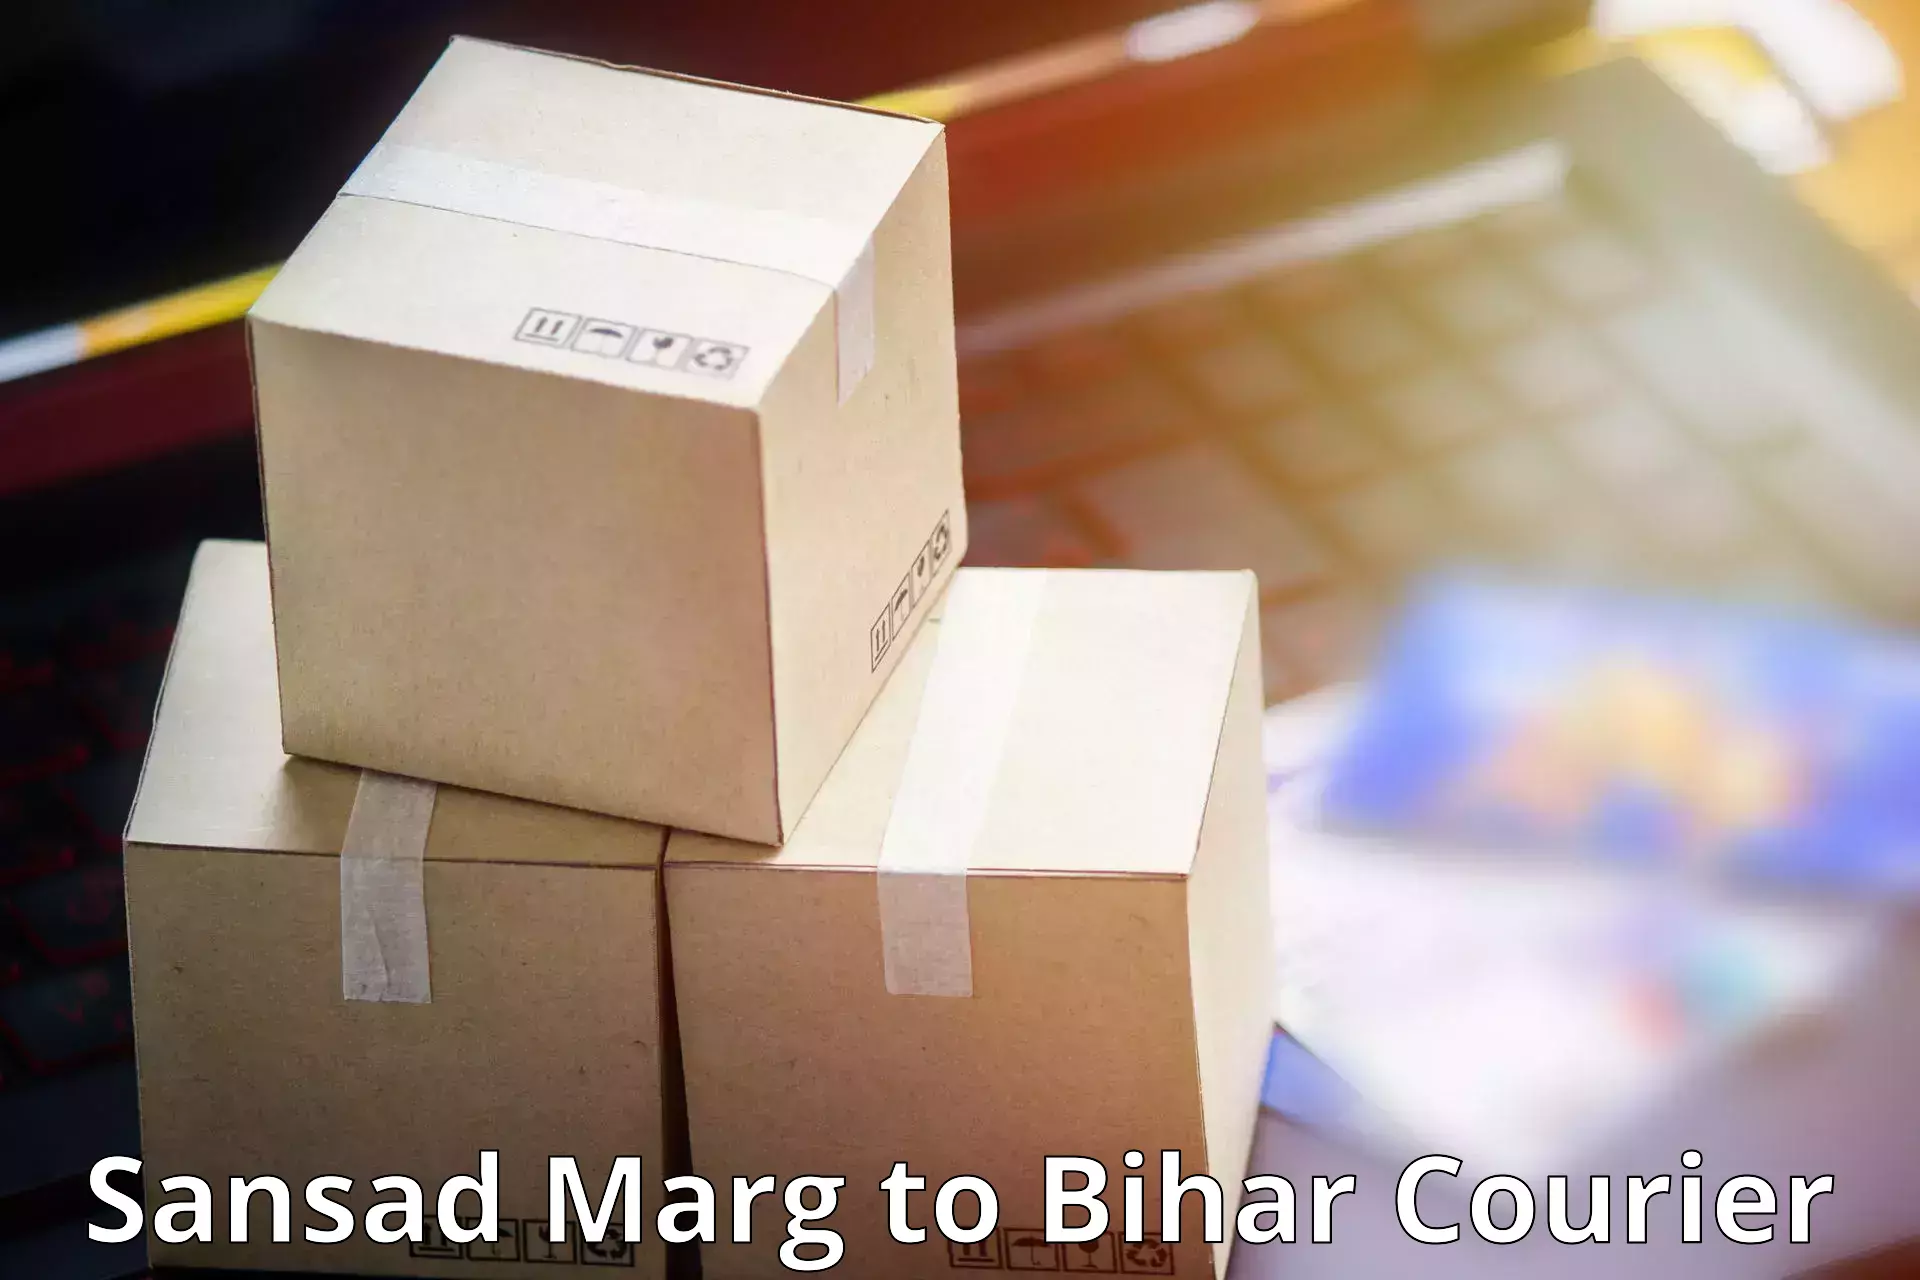 Courier service comparison Sansad Marg to Motihari